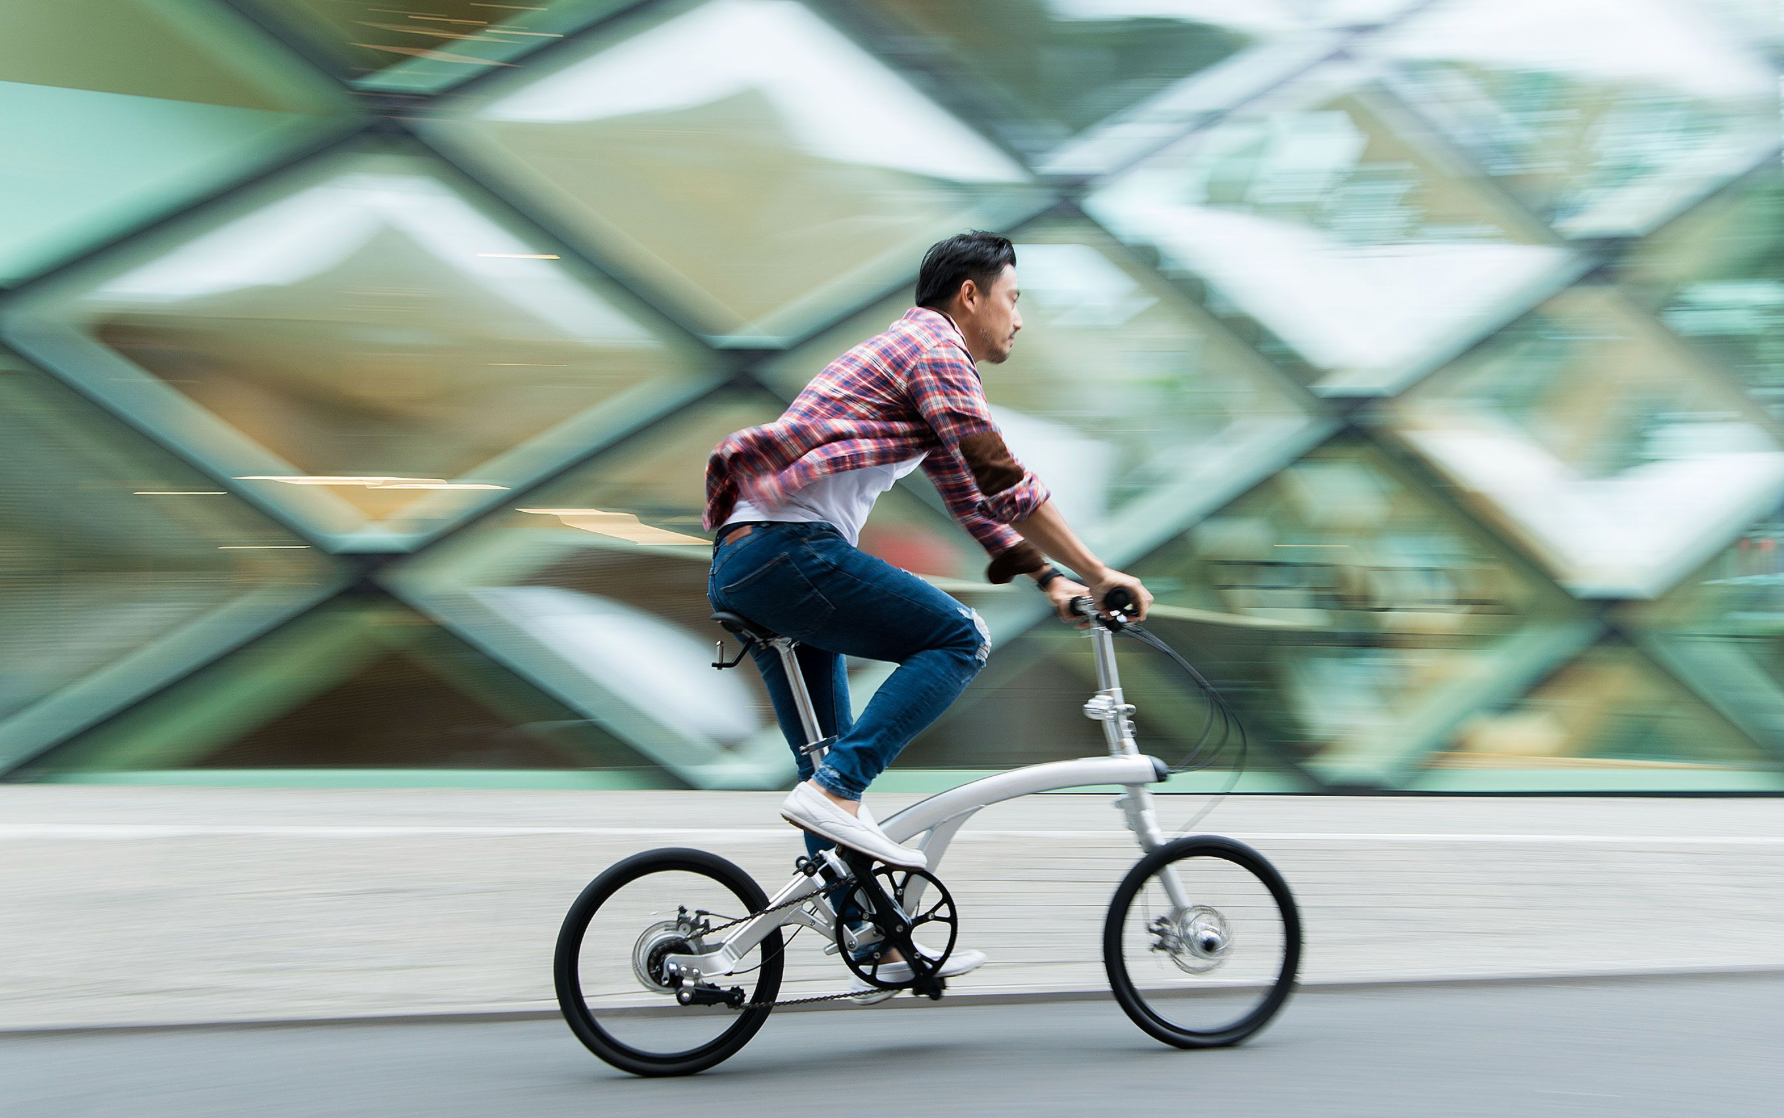 A man riding the lightweight foldable Iruka C bike in the city.